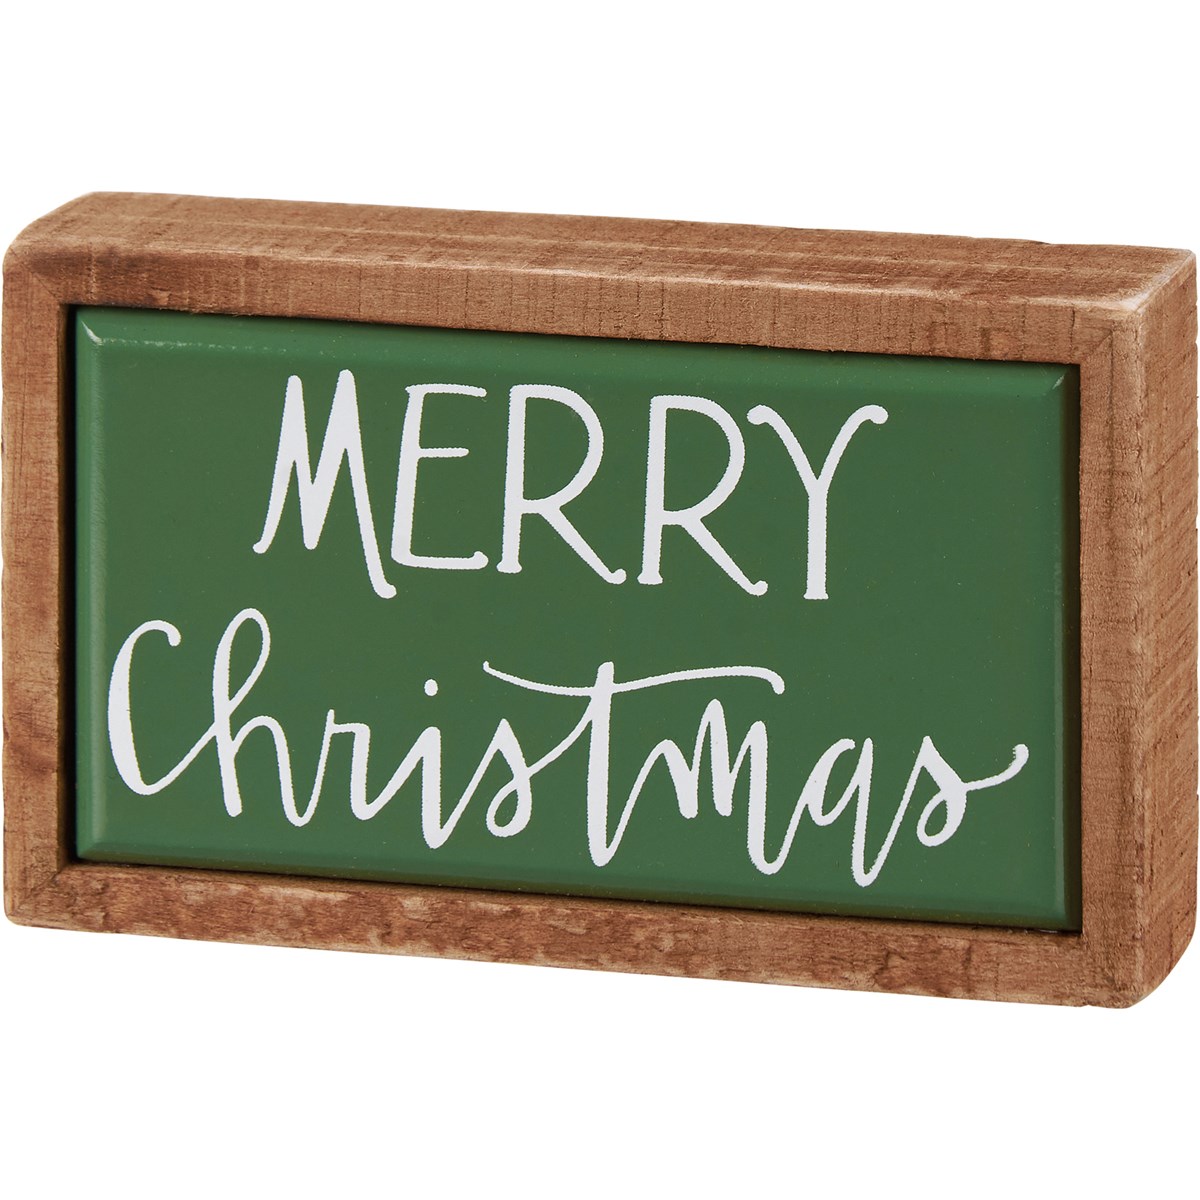 Merry Christmas Green Box Sign Mini - Wood